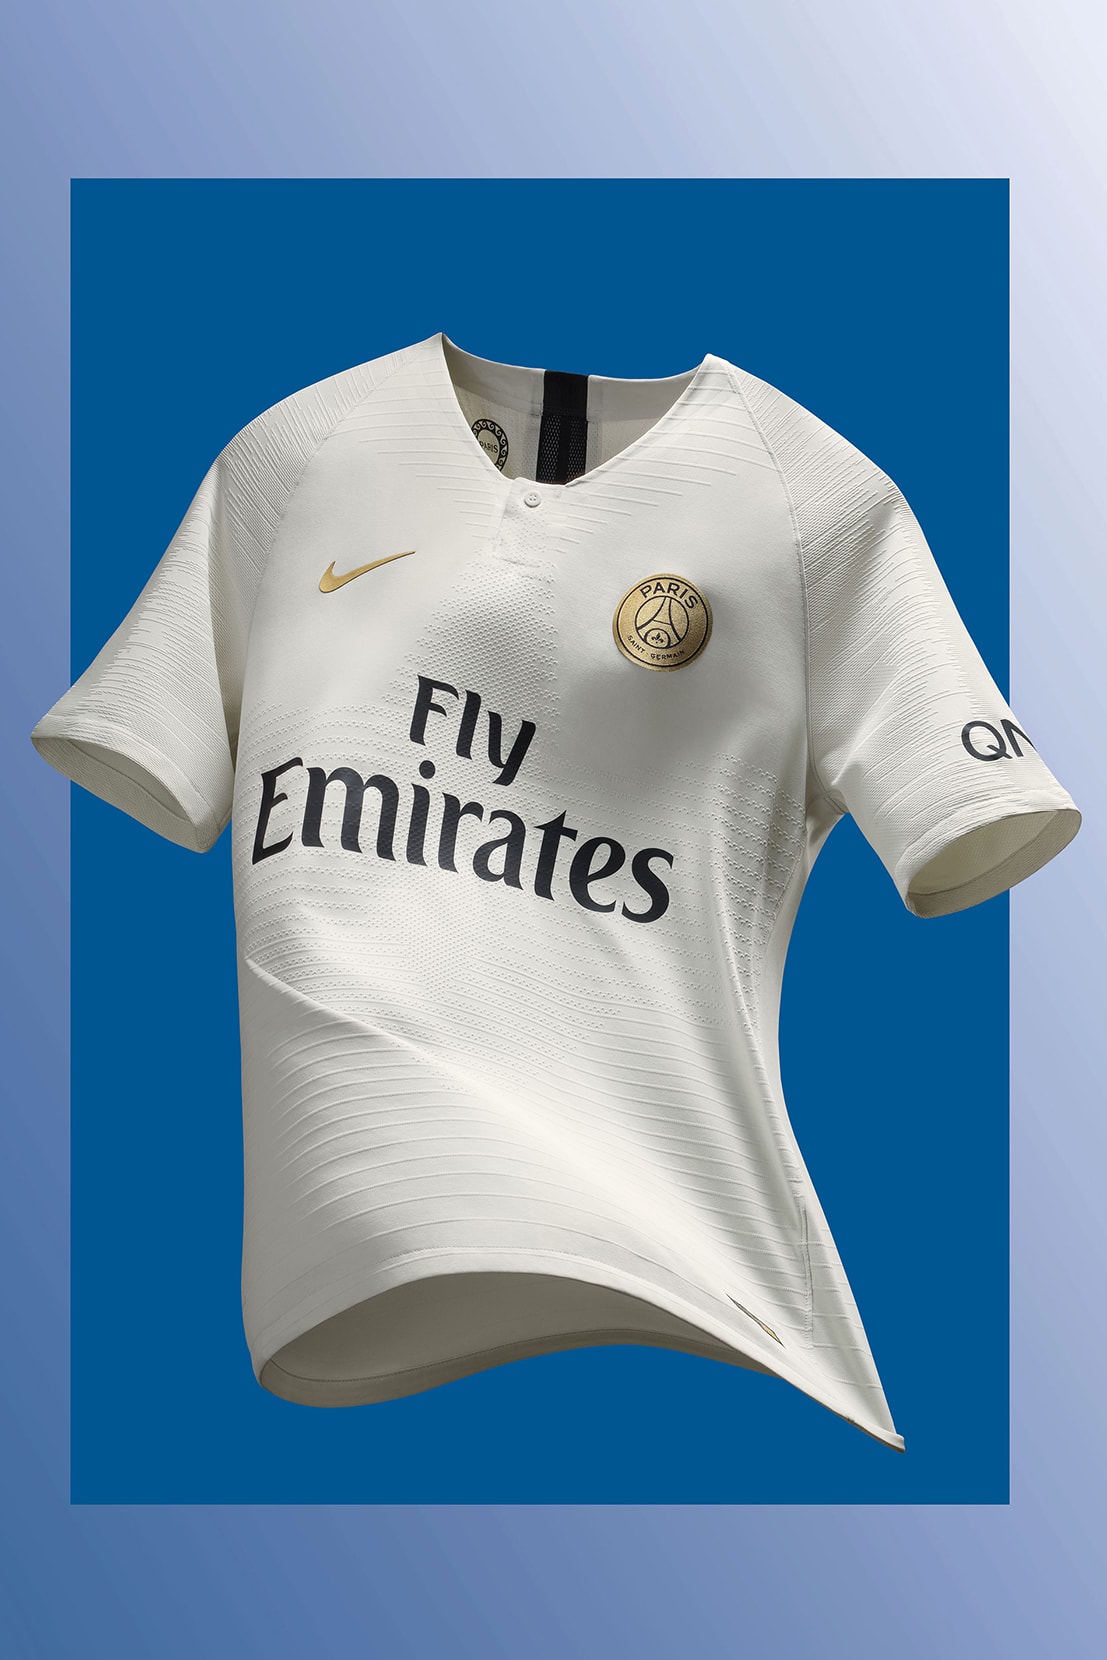 Nike Football Paris Saint Germain 2018/2019 Away Kit Cop Purchase Buy Available Now Kylian Mbappe Neymar Jr Edison Cavani